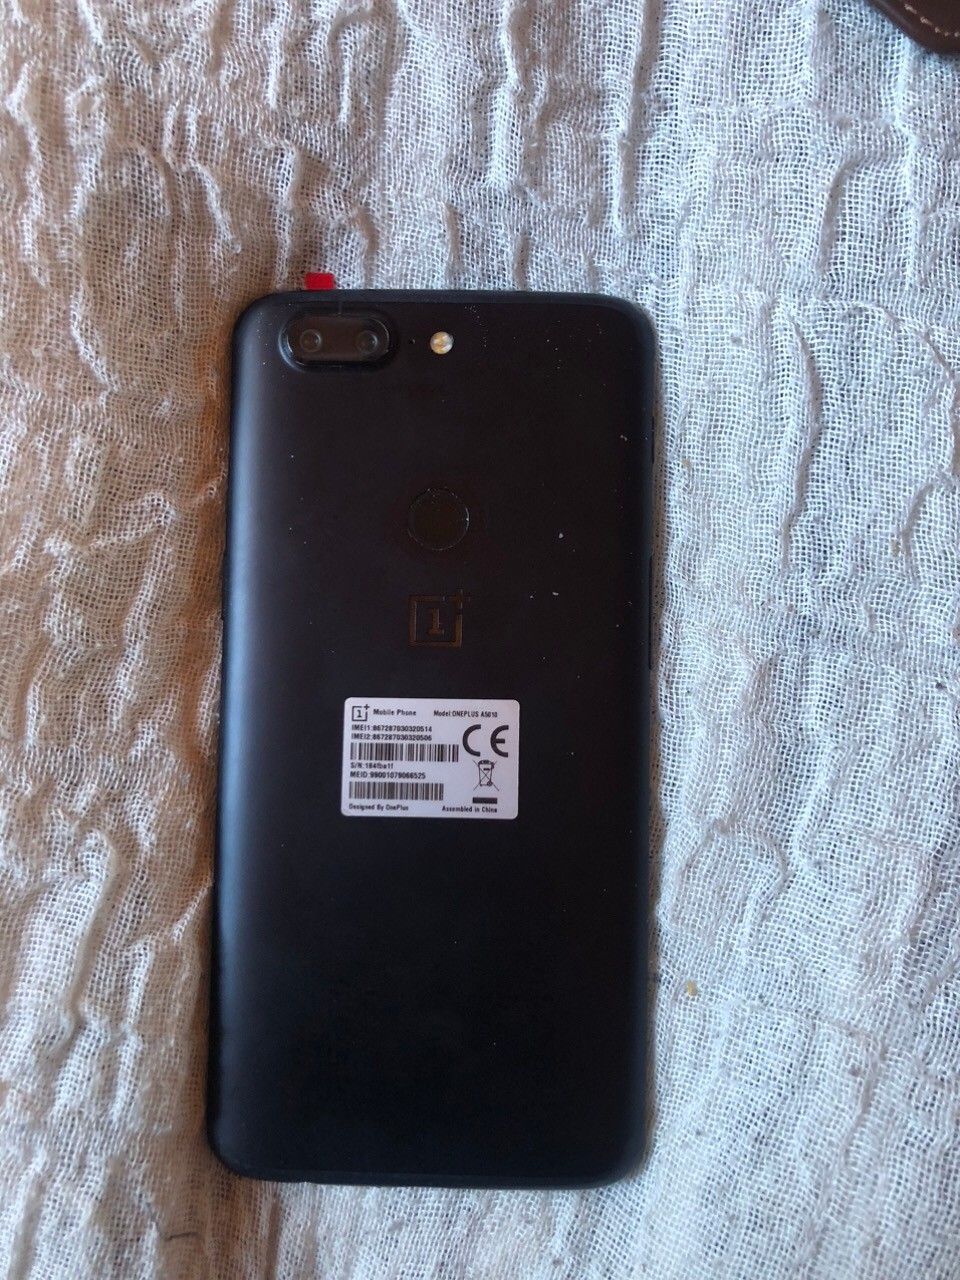 OnePlus A5010